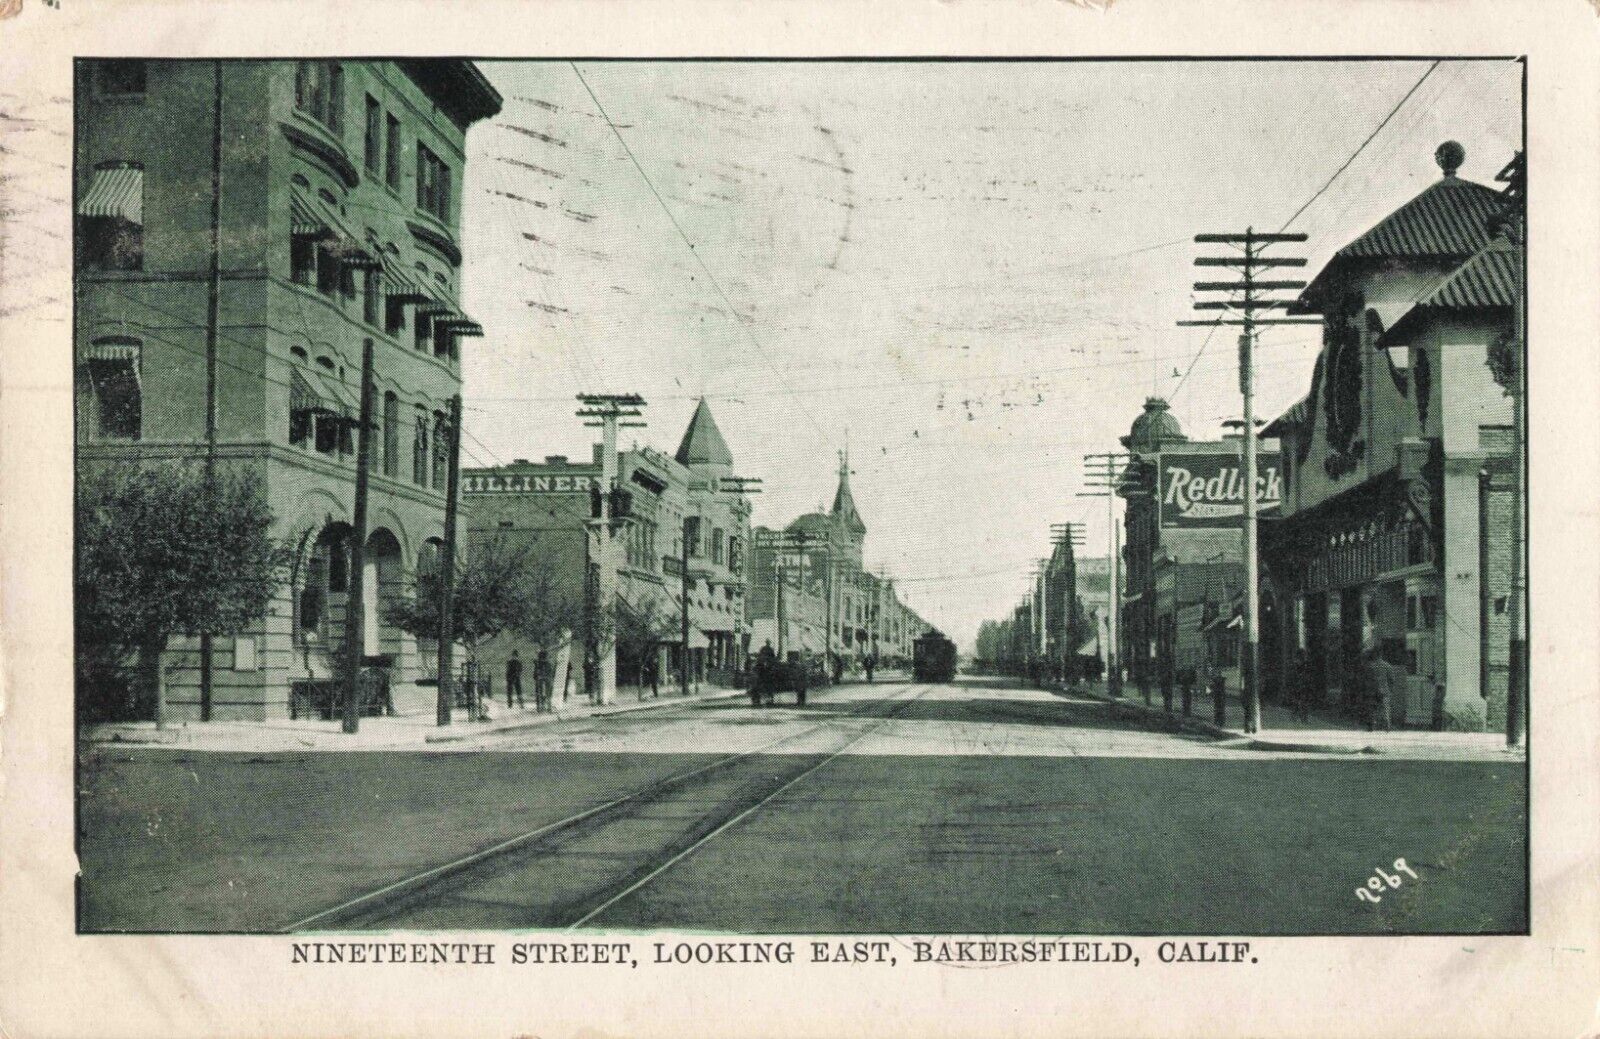 Nineteenth Street Looking East Bakersfield California CA Millinery 1910 Postcard